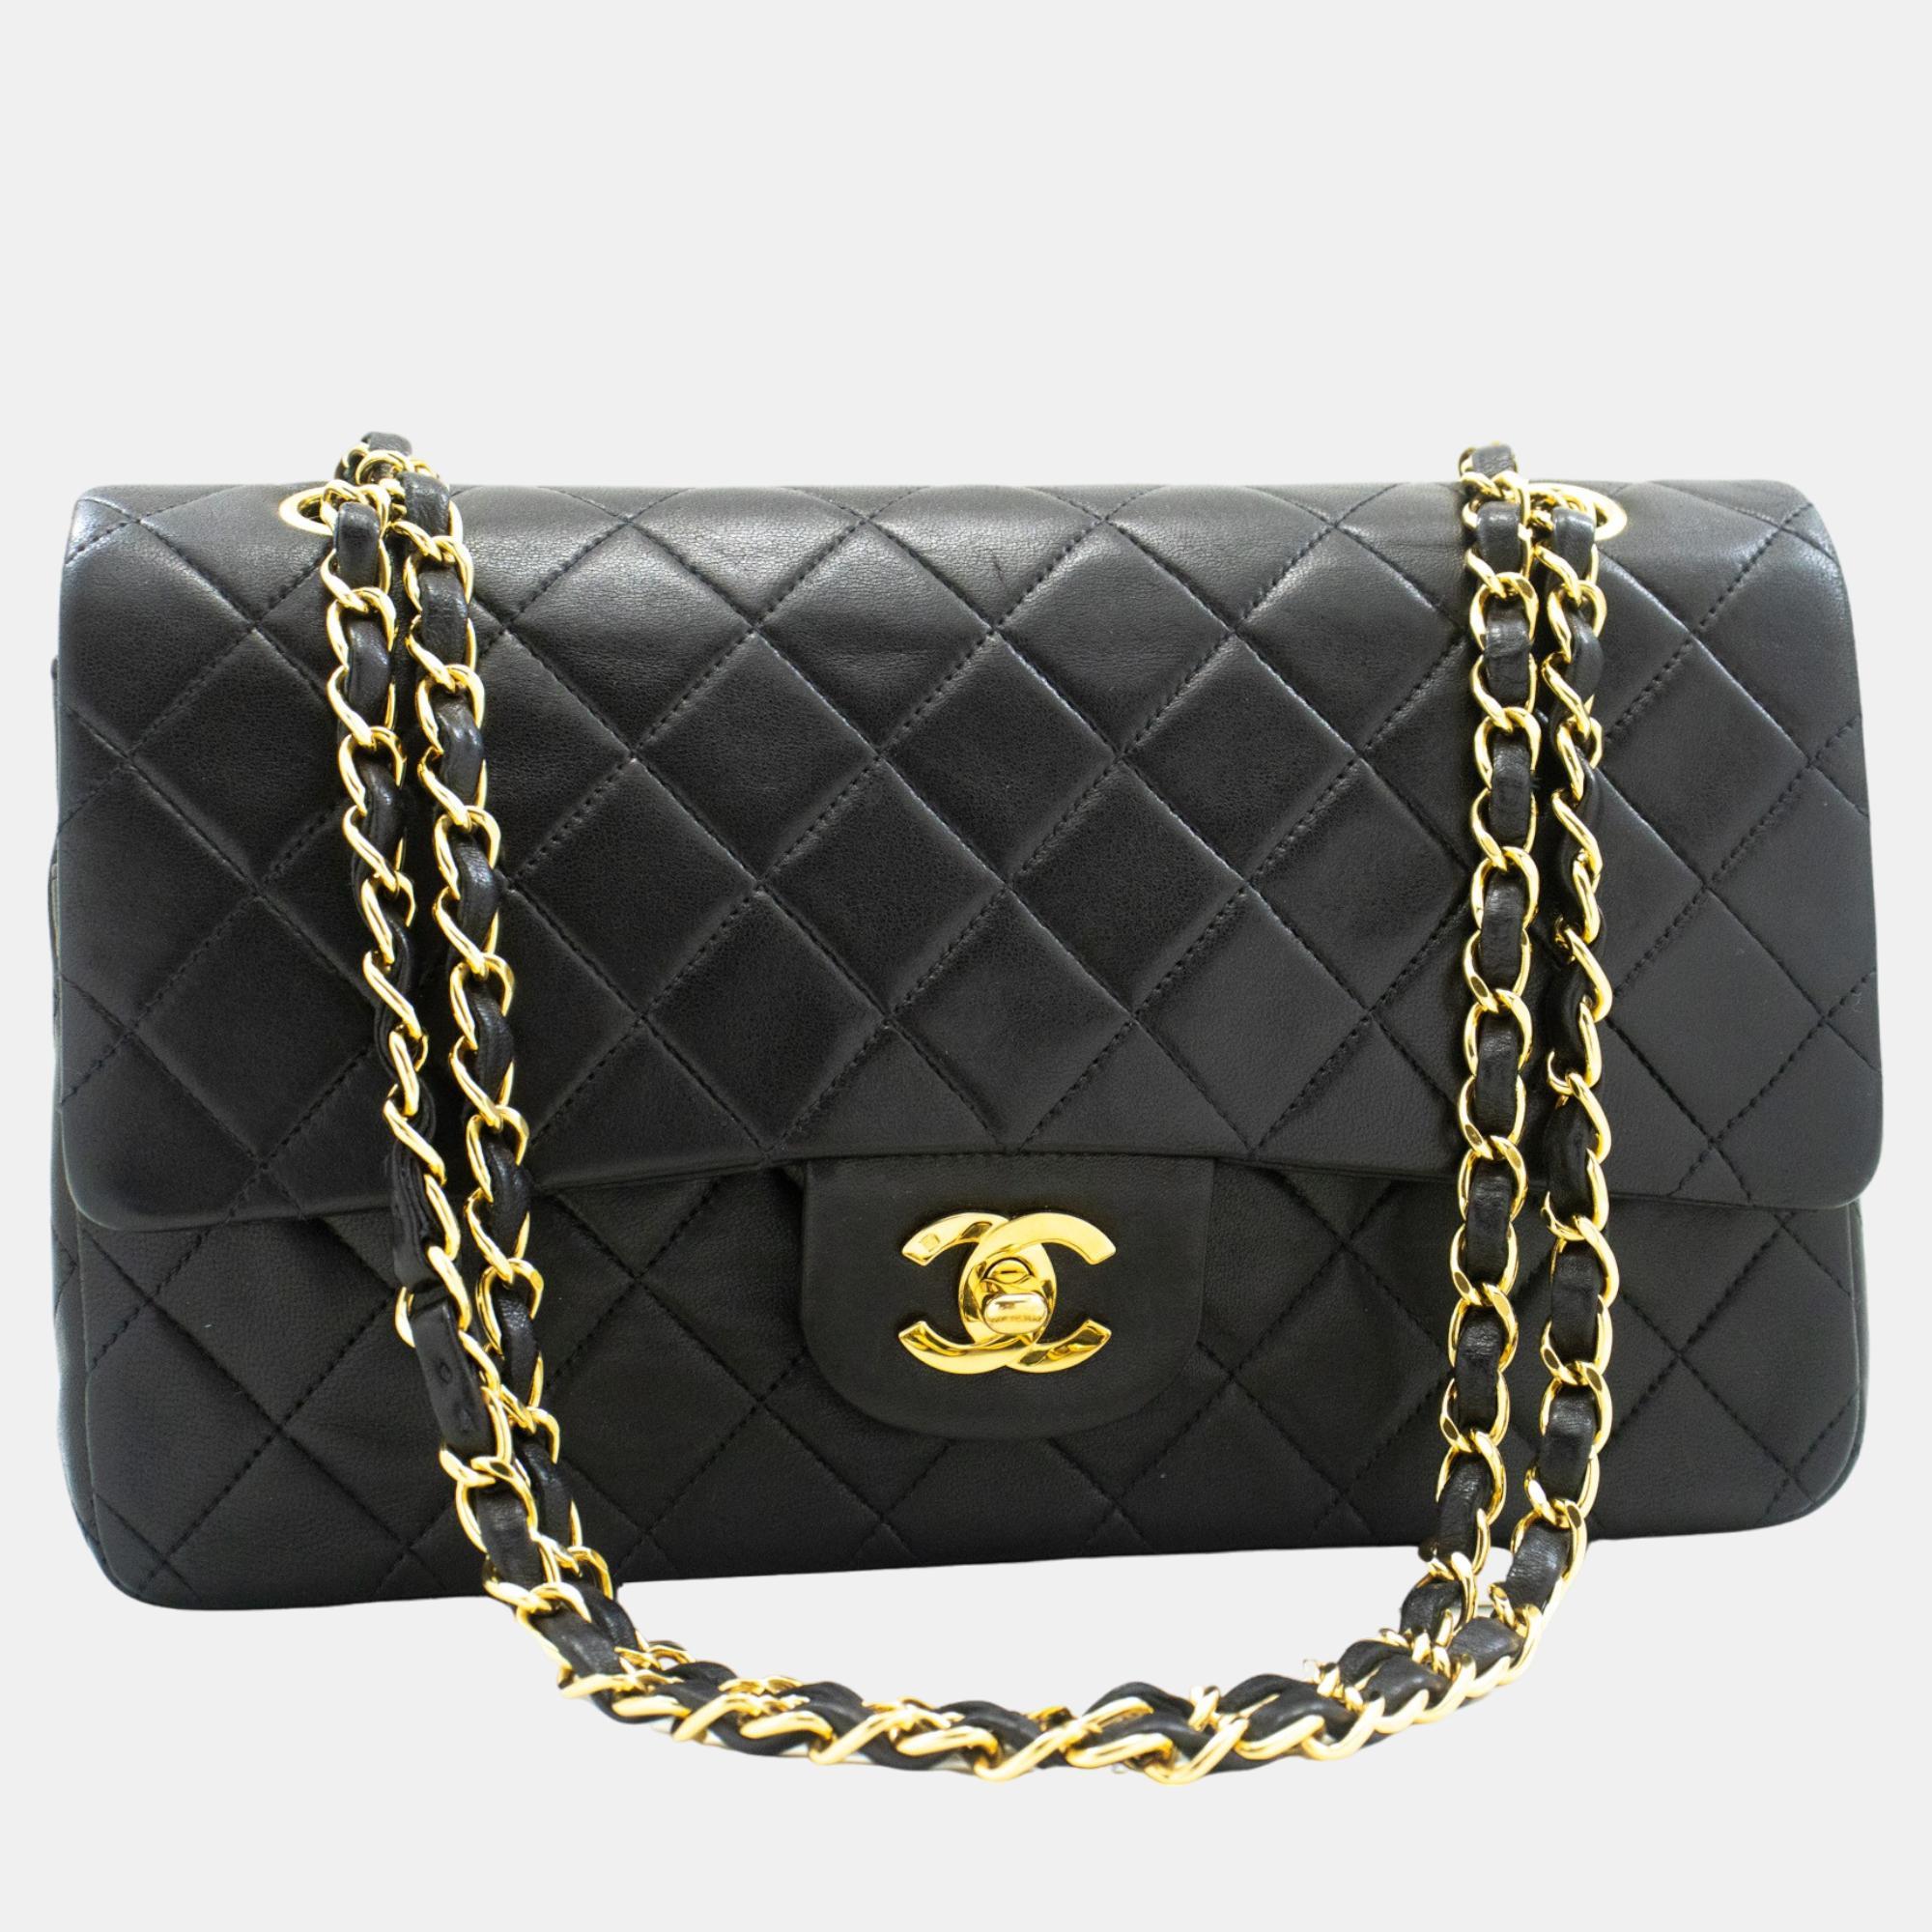 Chanel black leather  classic double flap shoulder bag